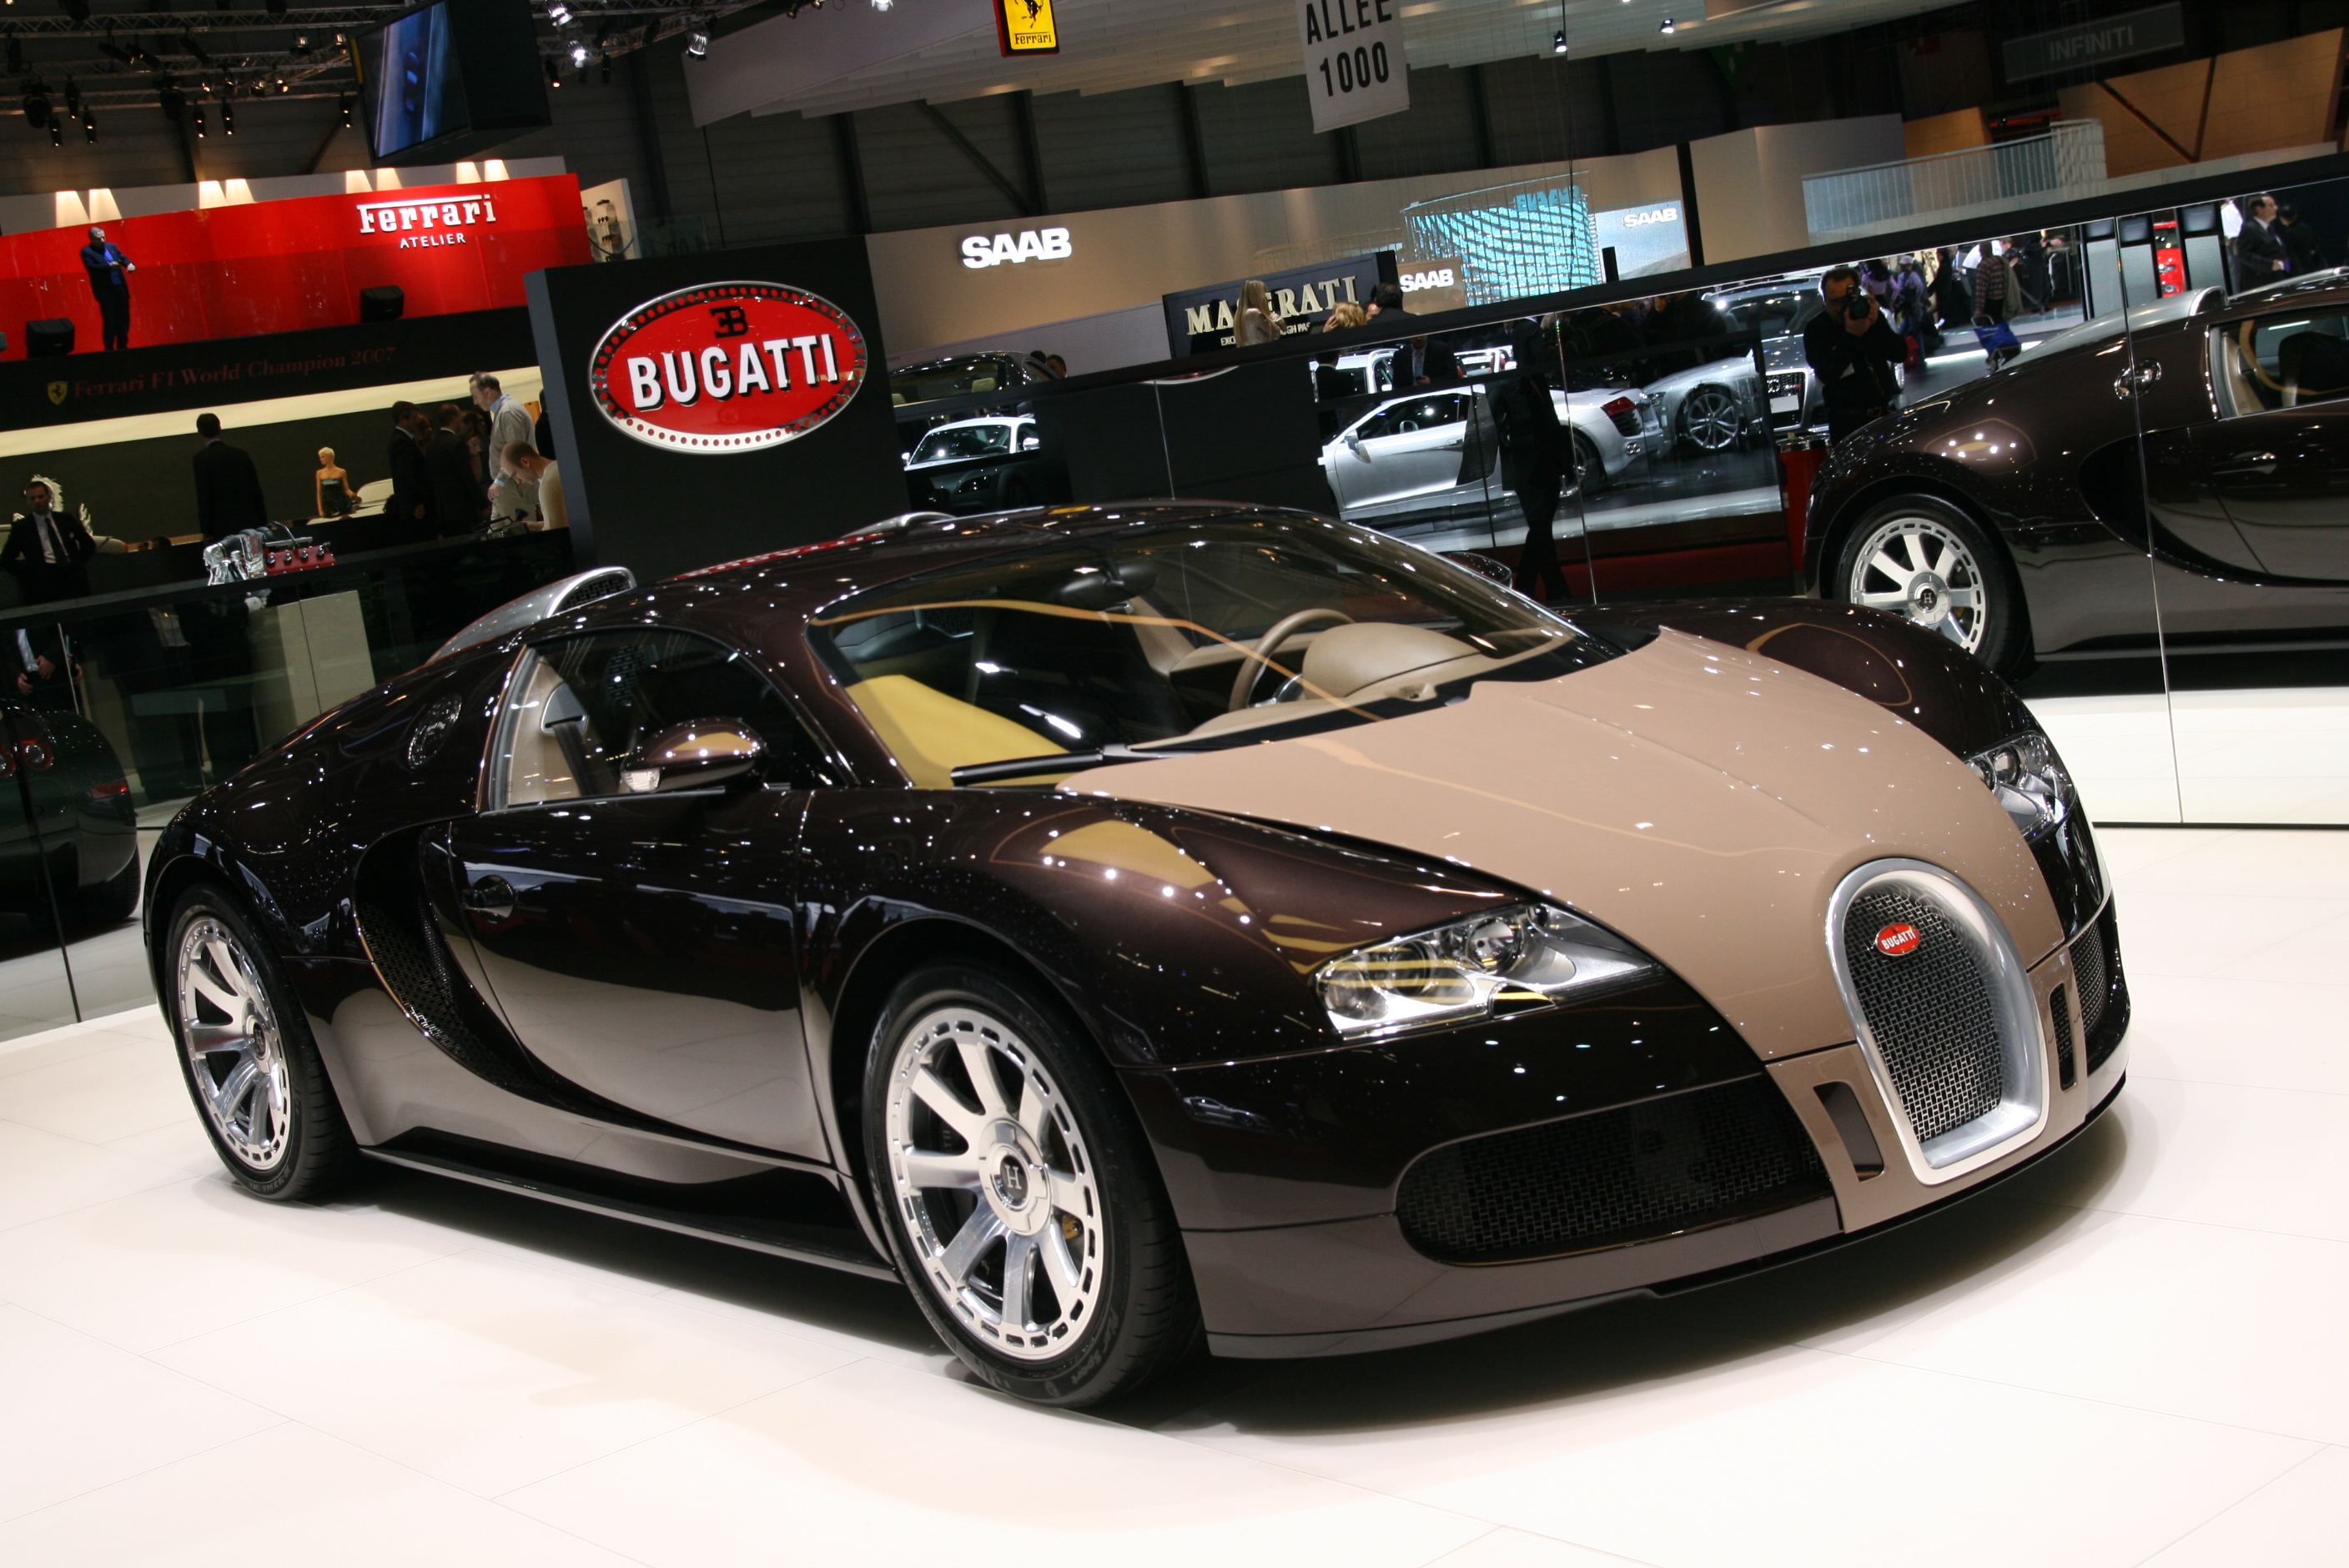 автомобили, Bugatti Veyron, Bugatti - обои на рабочий стол